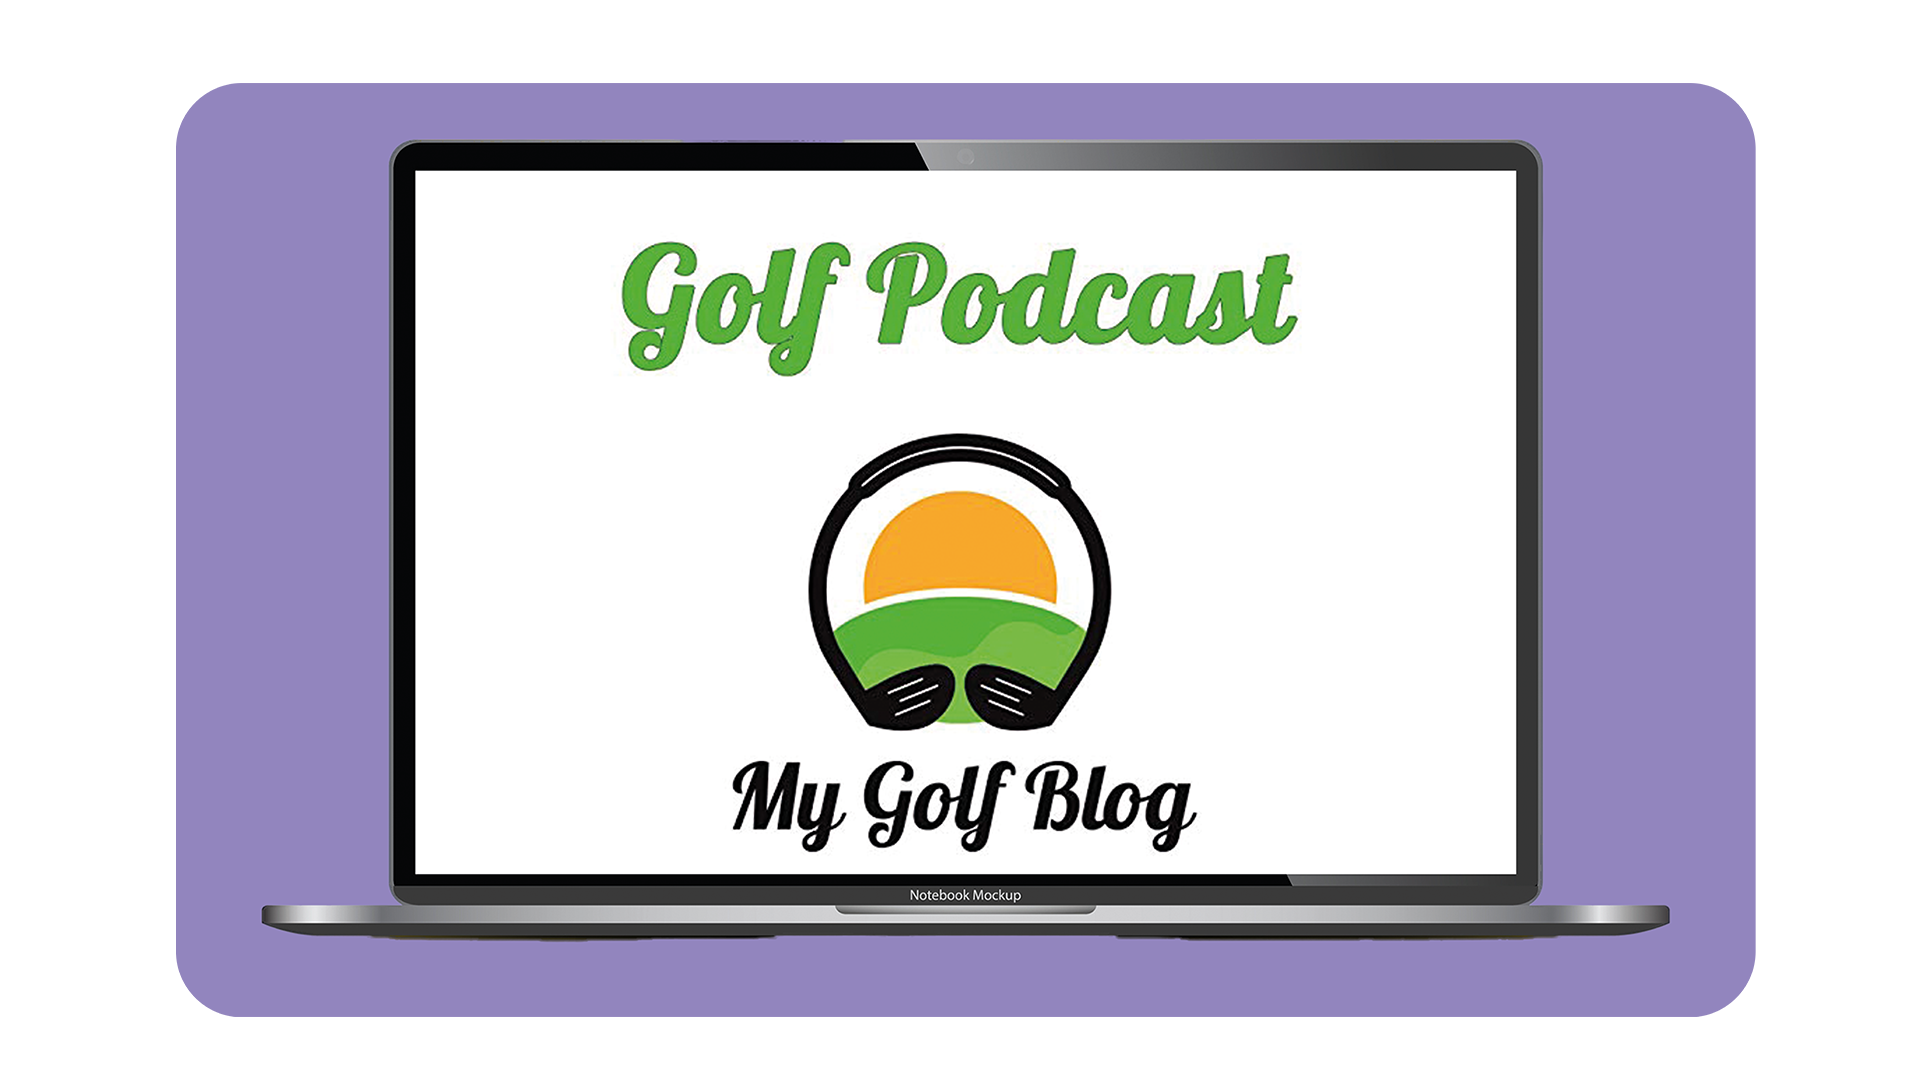 My Golf Blog Podcast